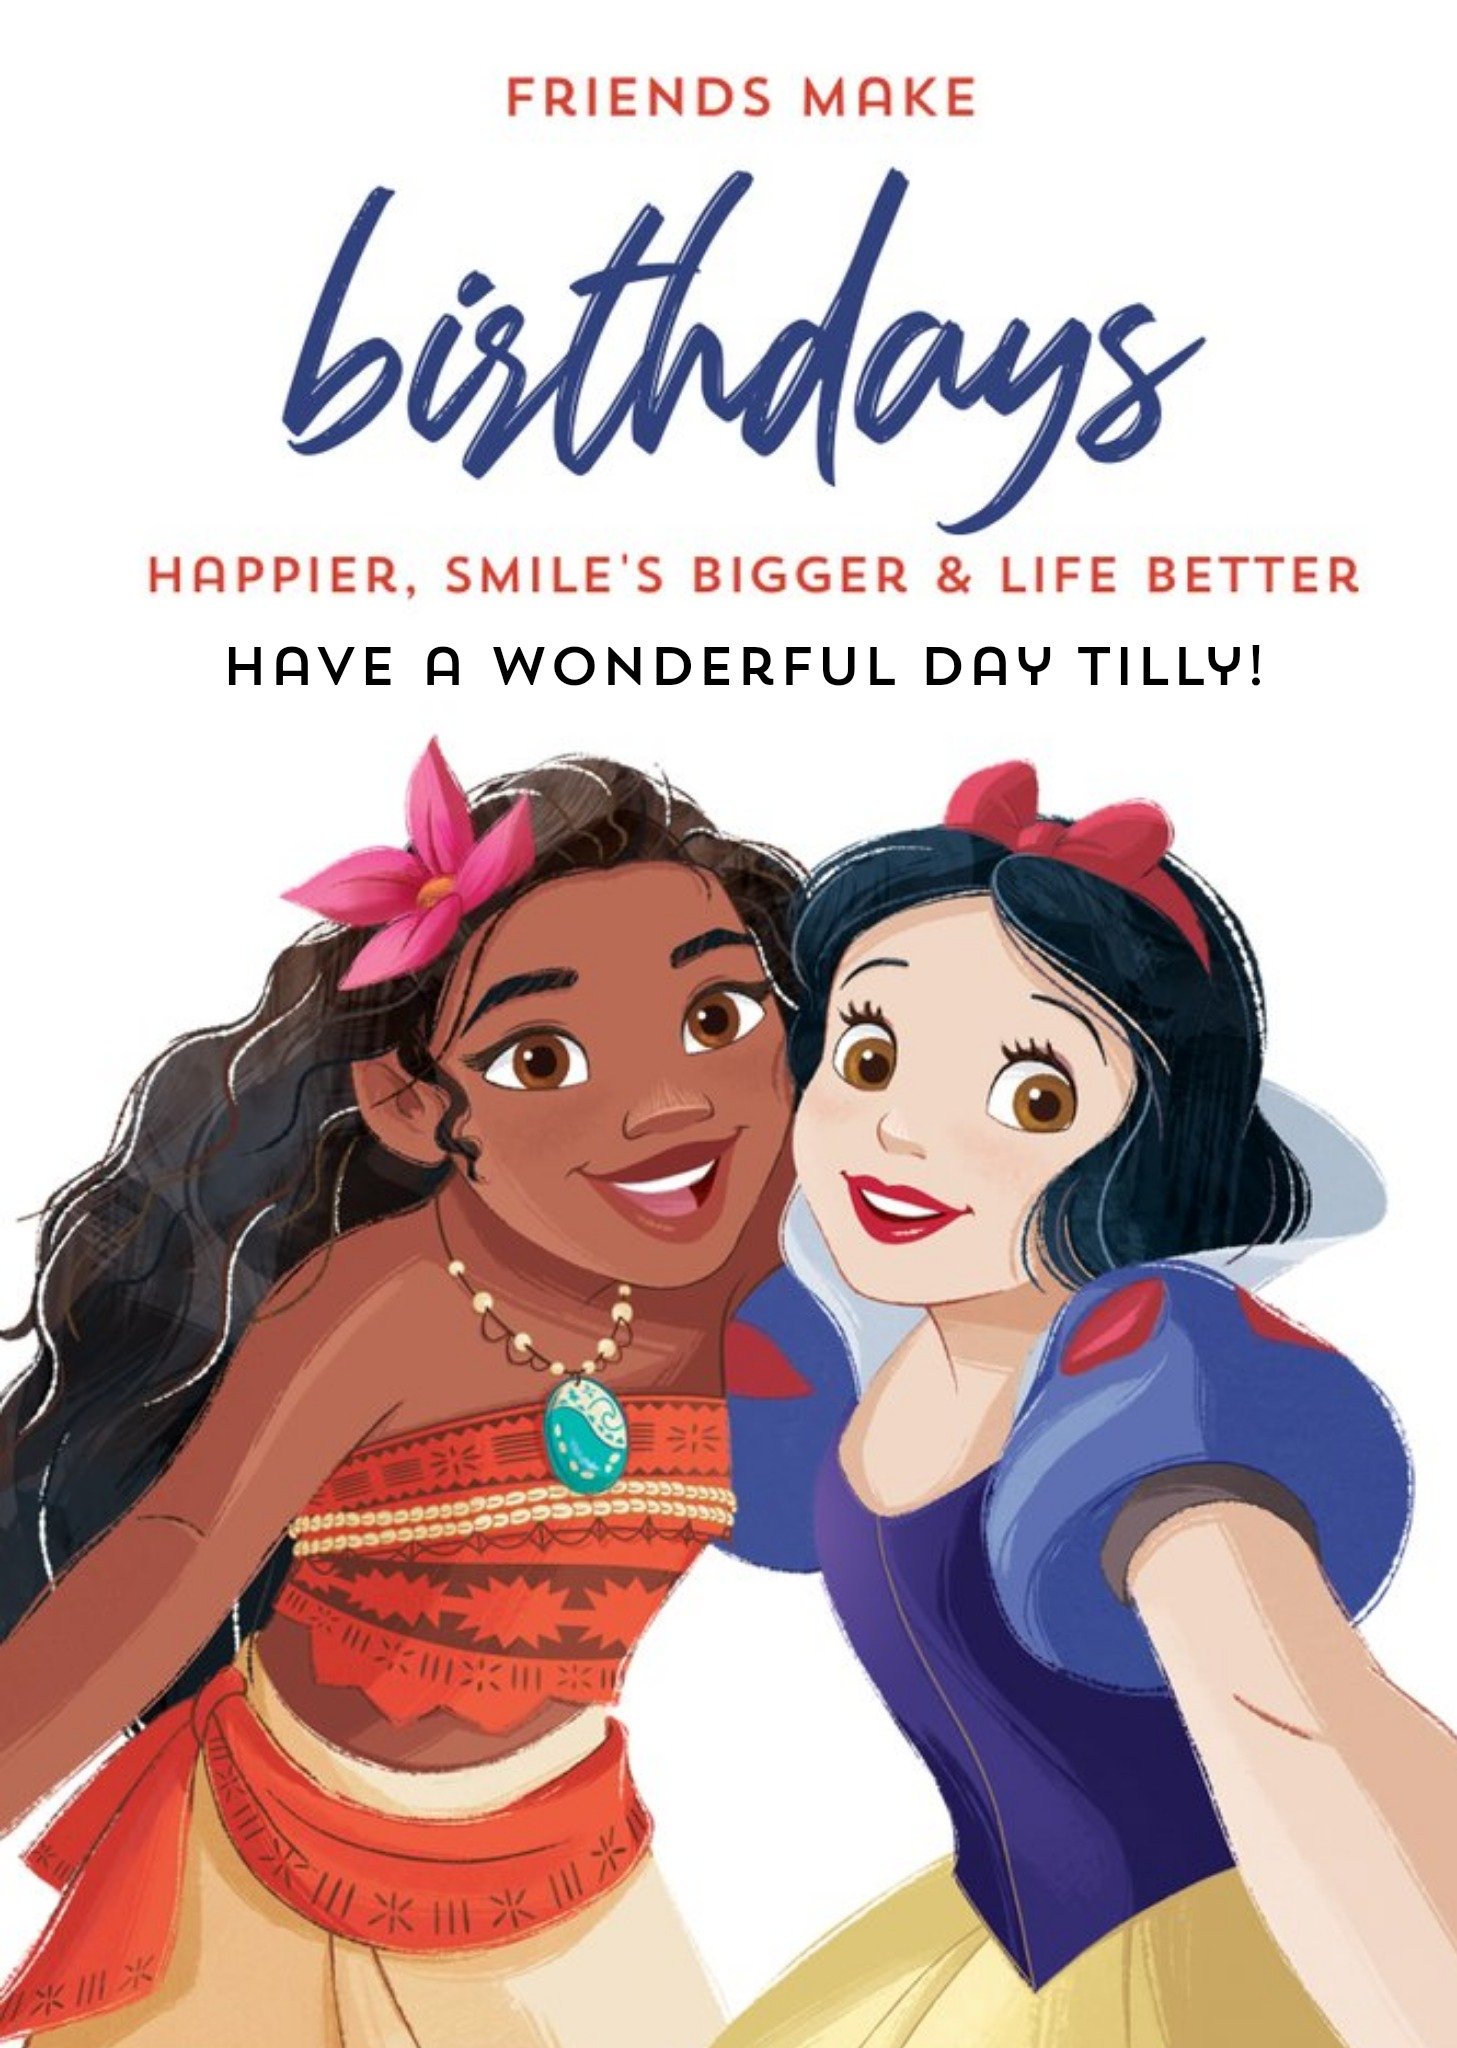 Disney Princess Friends Make Birthdays Happier Card Ecard